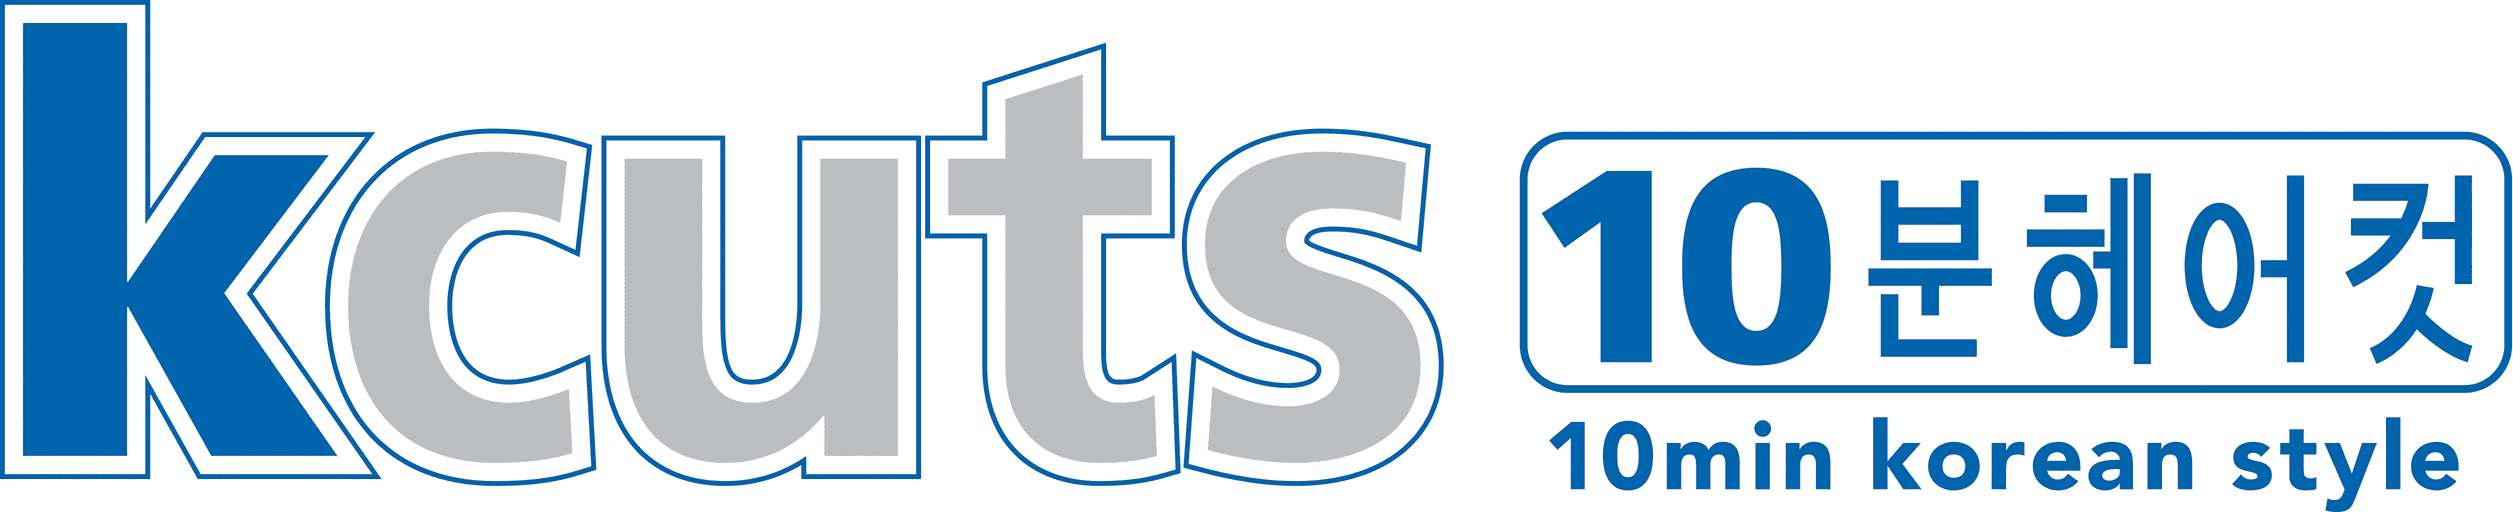 kcuts logo horizontal